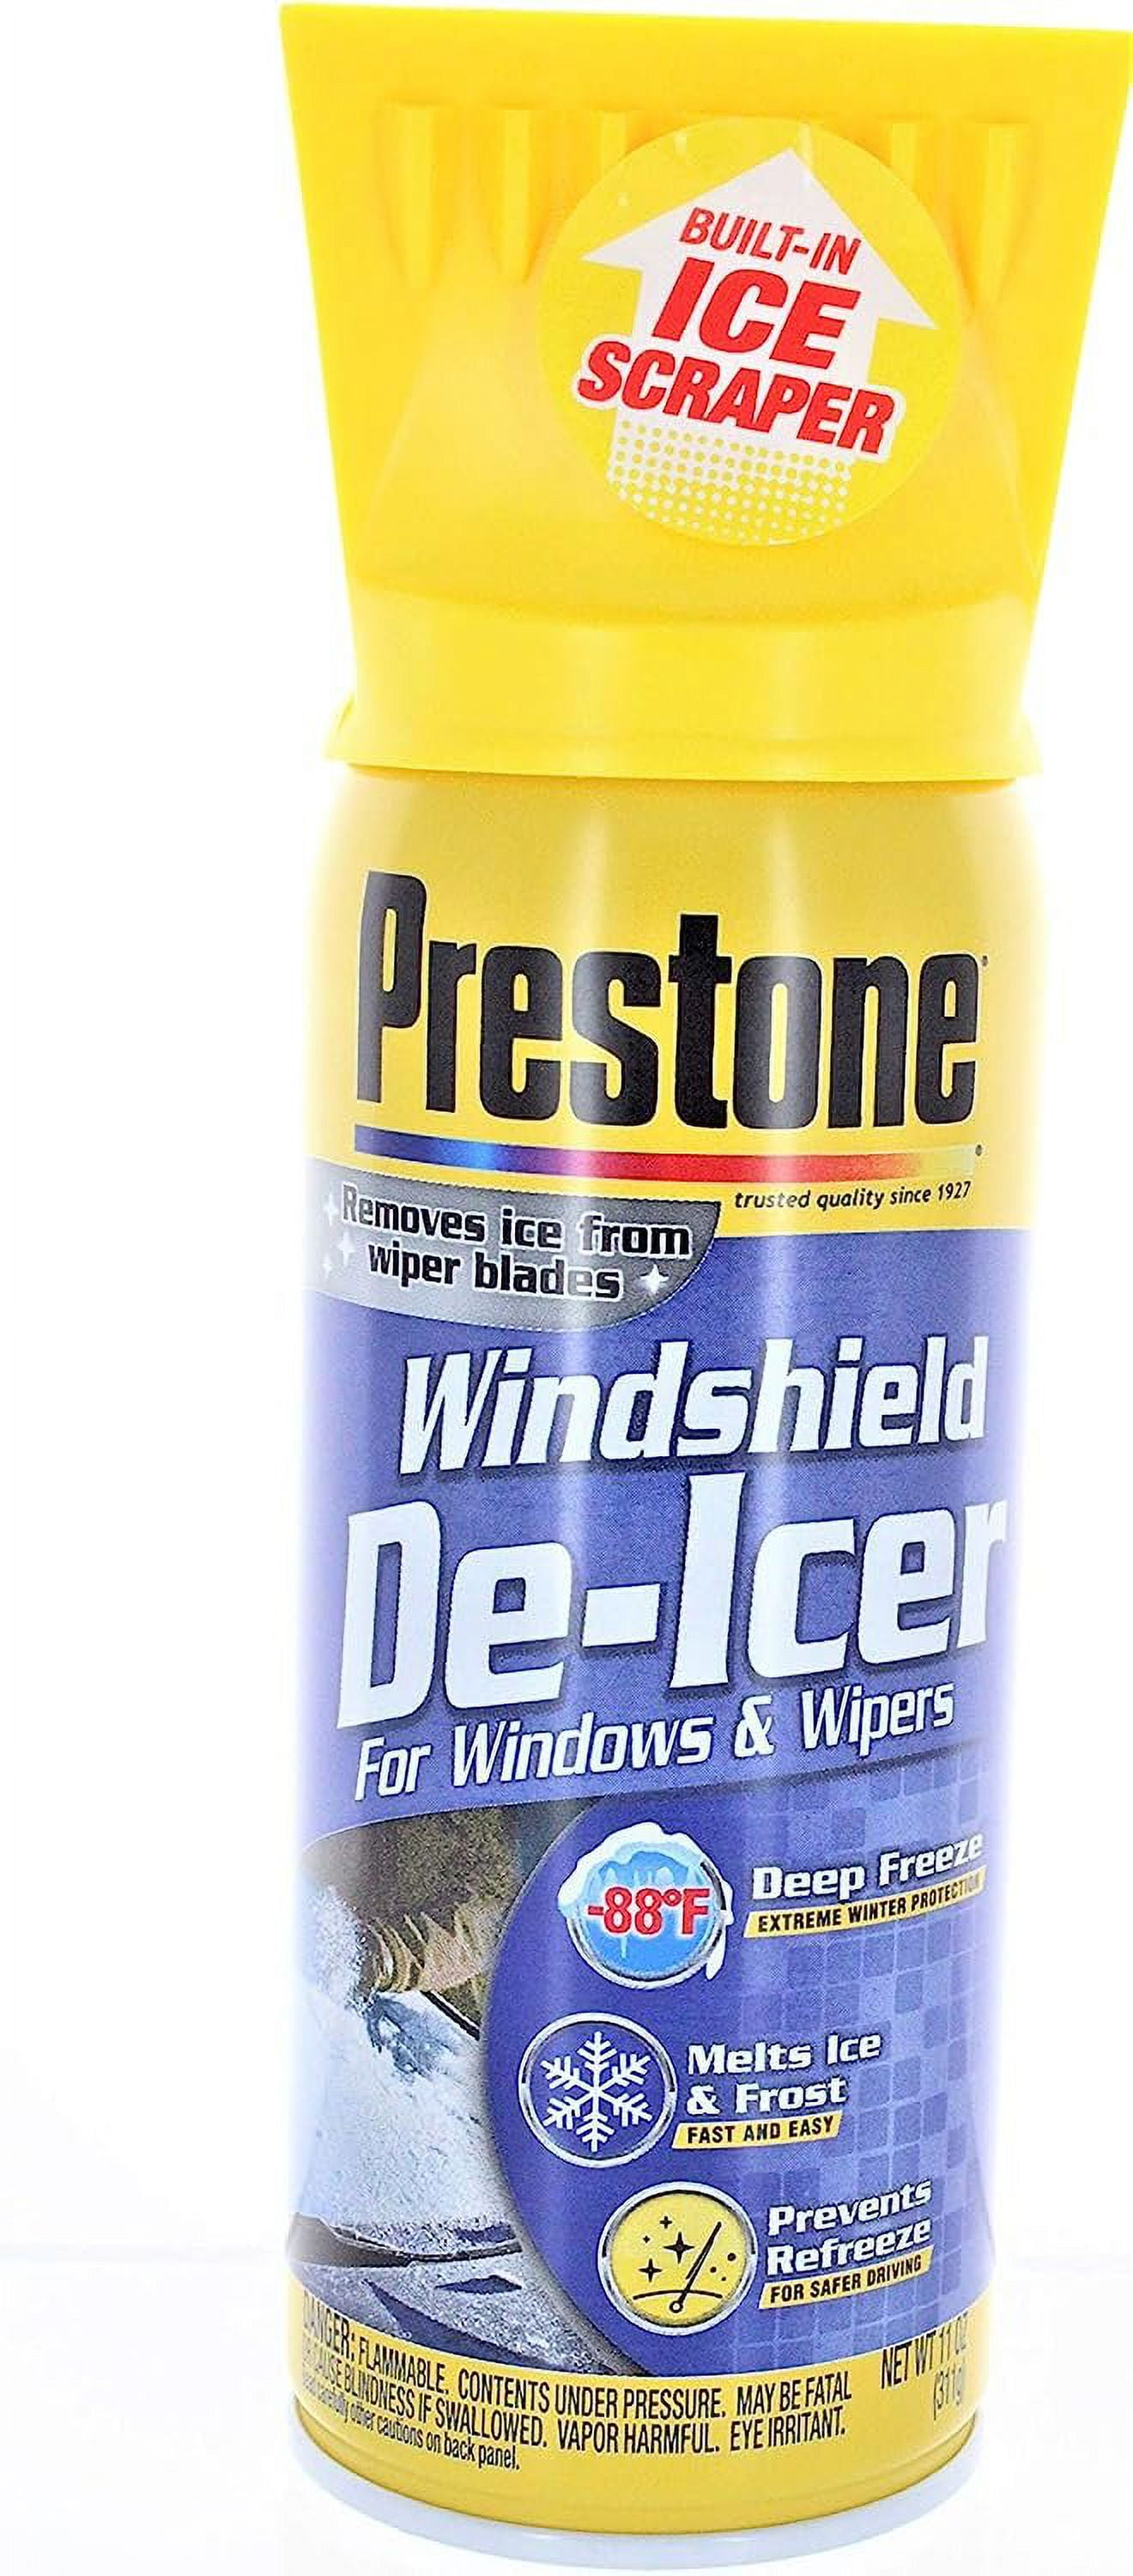 Prestone De-Icer Winter Windshield Washer Fluid